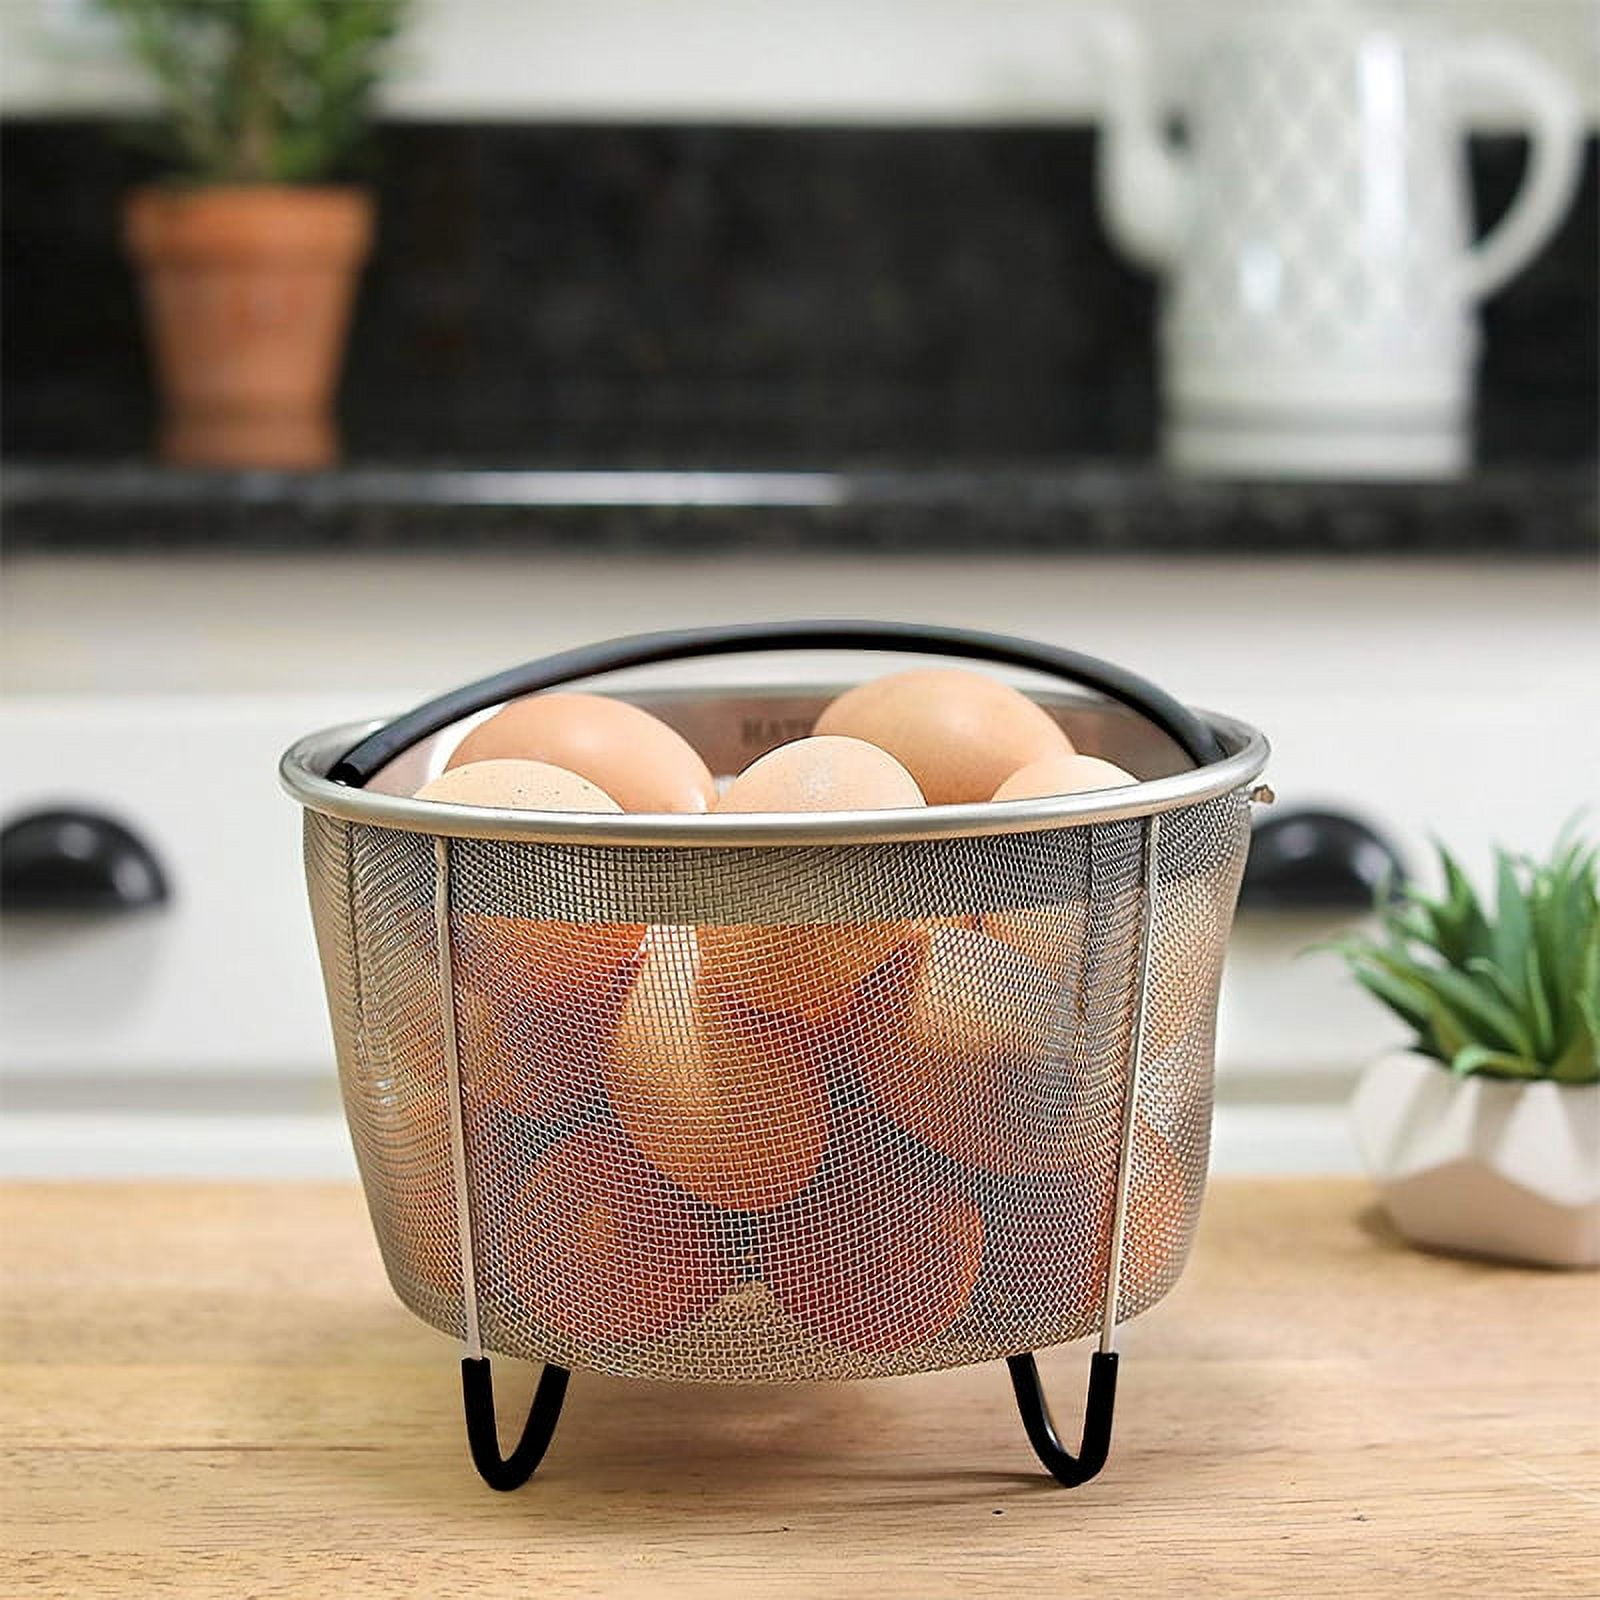 Instant Pot 210-0009-01 Silicone Steamer Basket